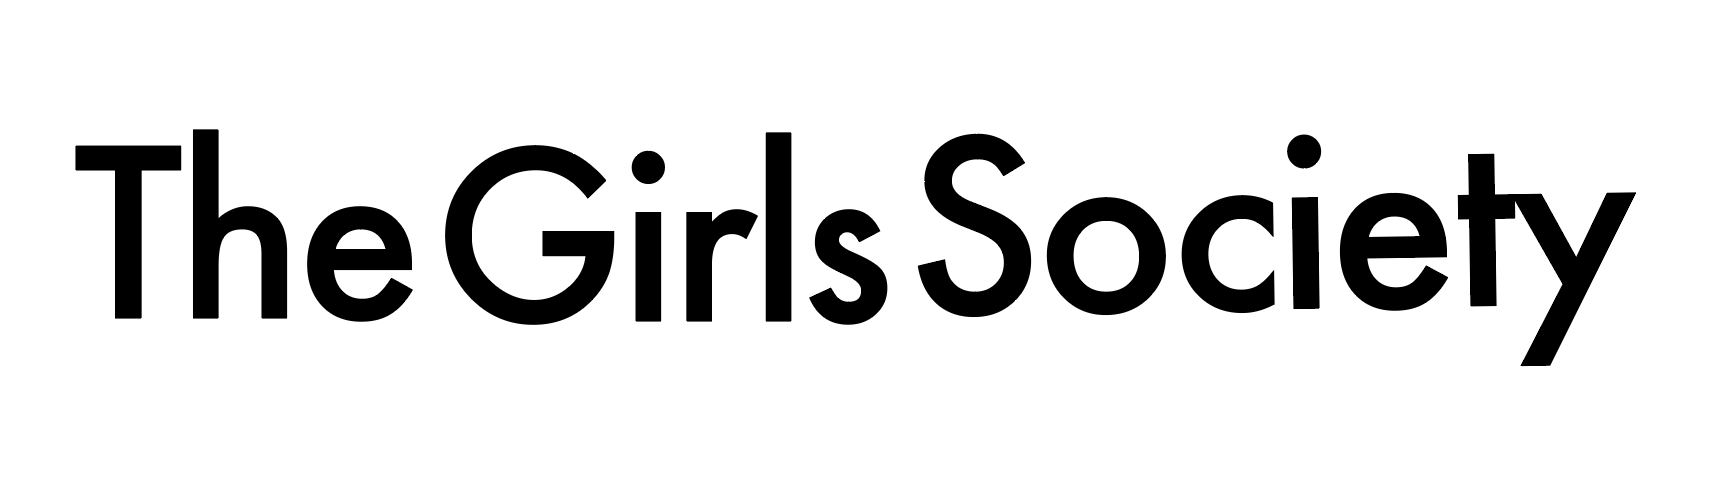 The Girls Society